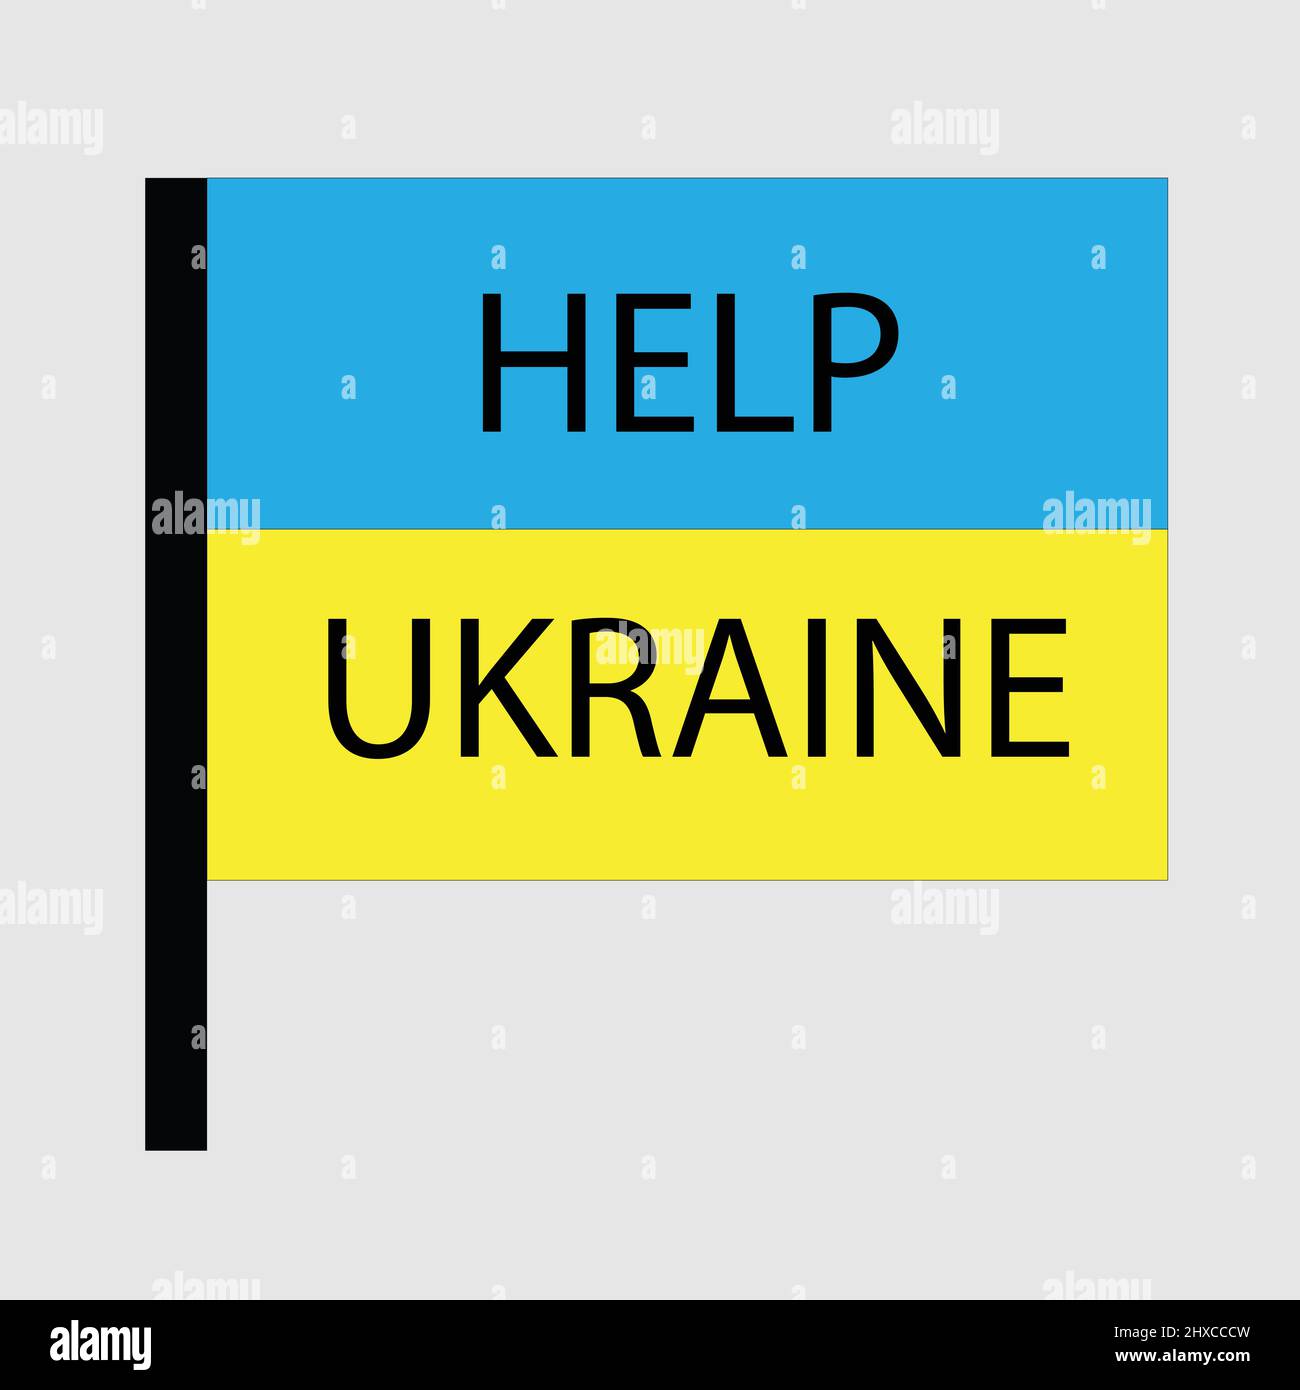 Ukrainian flag with the text help Ukraine on it Stock Vector